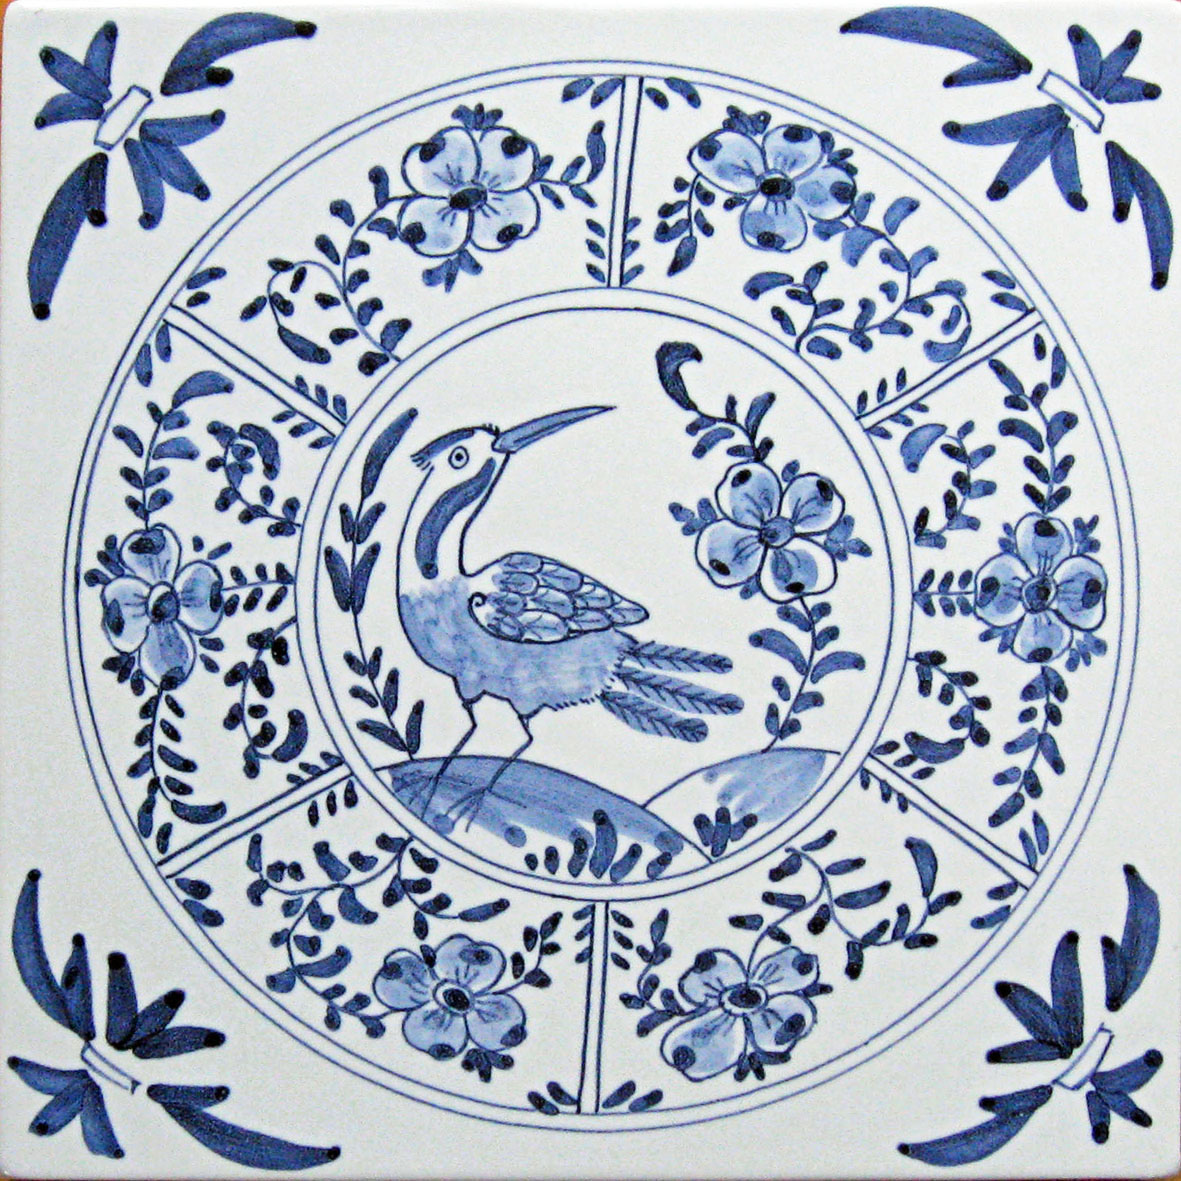 Chinoiserie bird tile